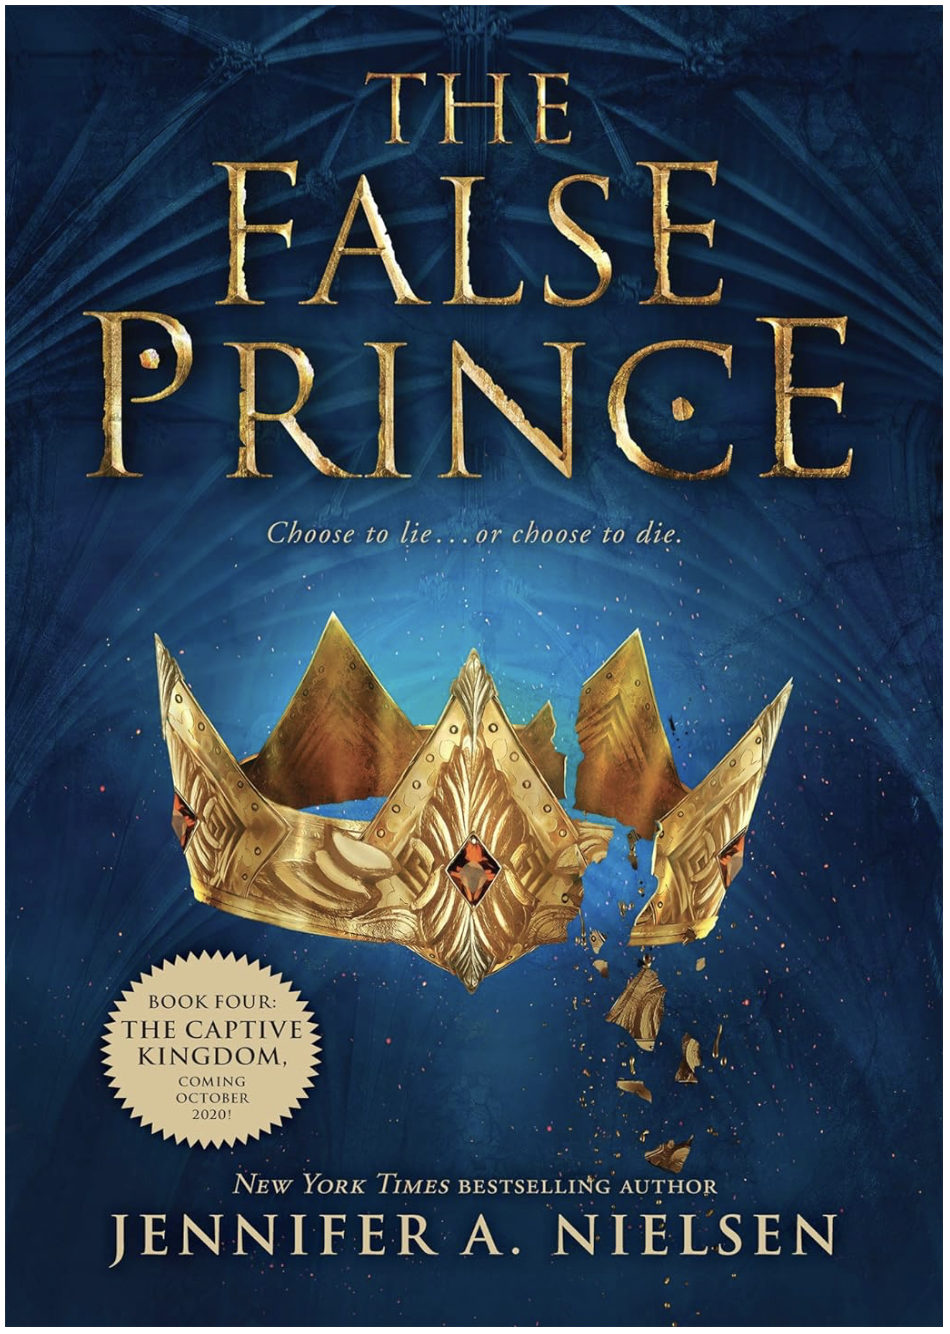 false prince book